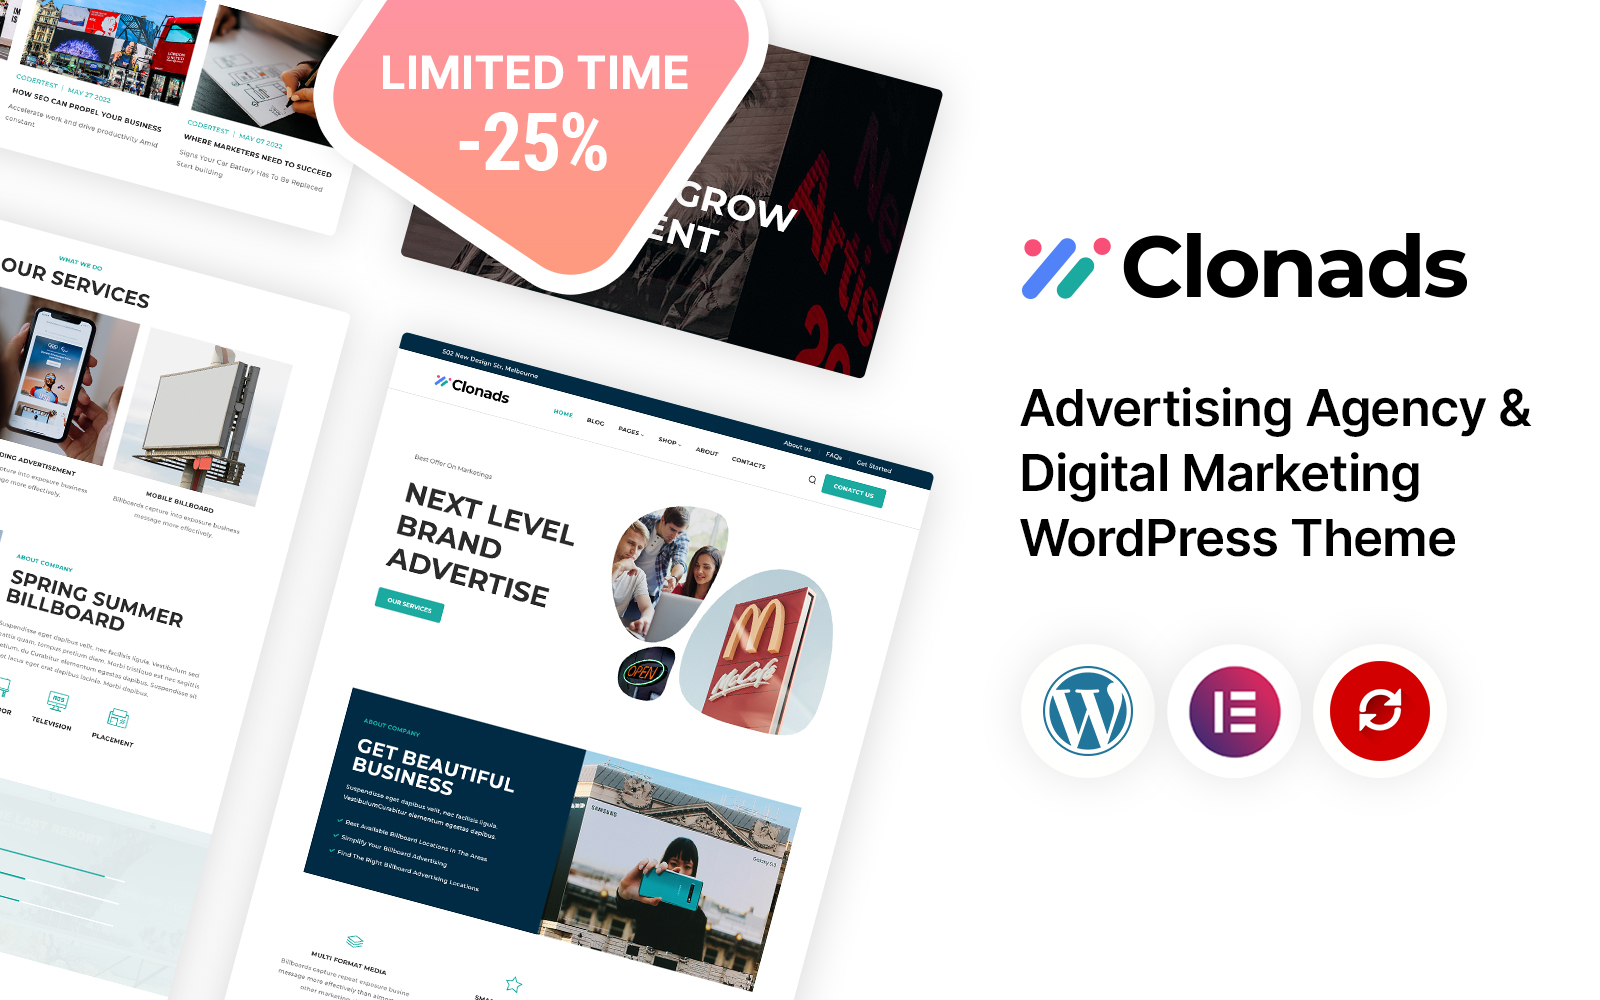 Clonads - Advertising Agency & Digital Marketing WordPress Theme